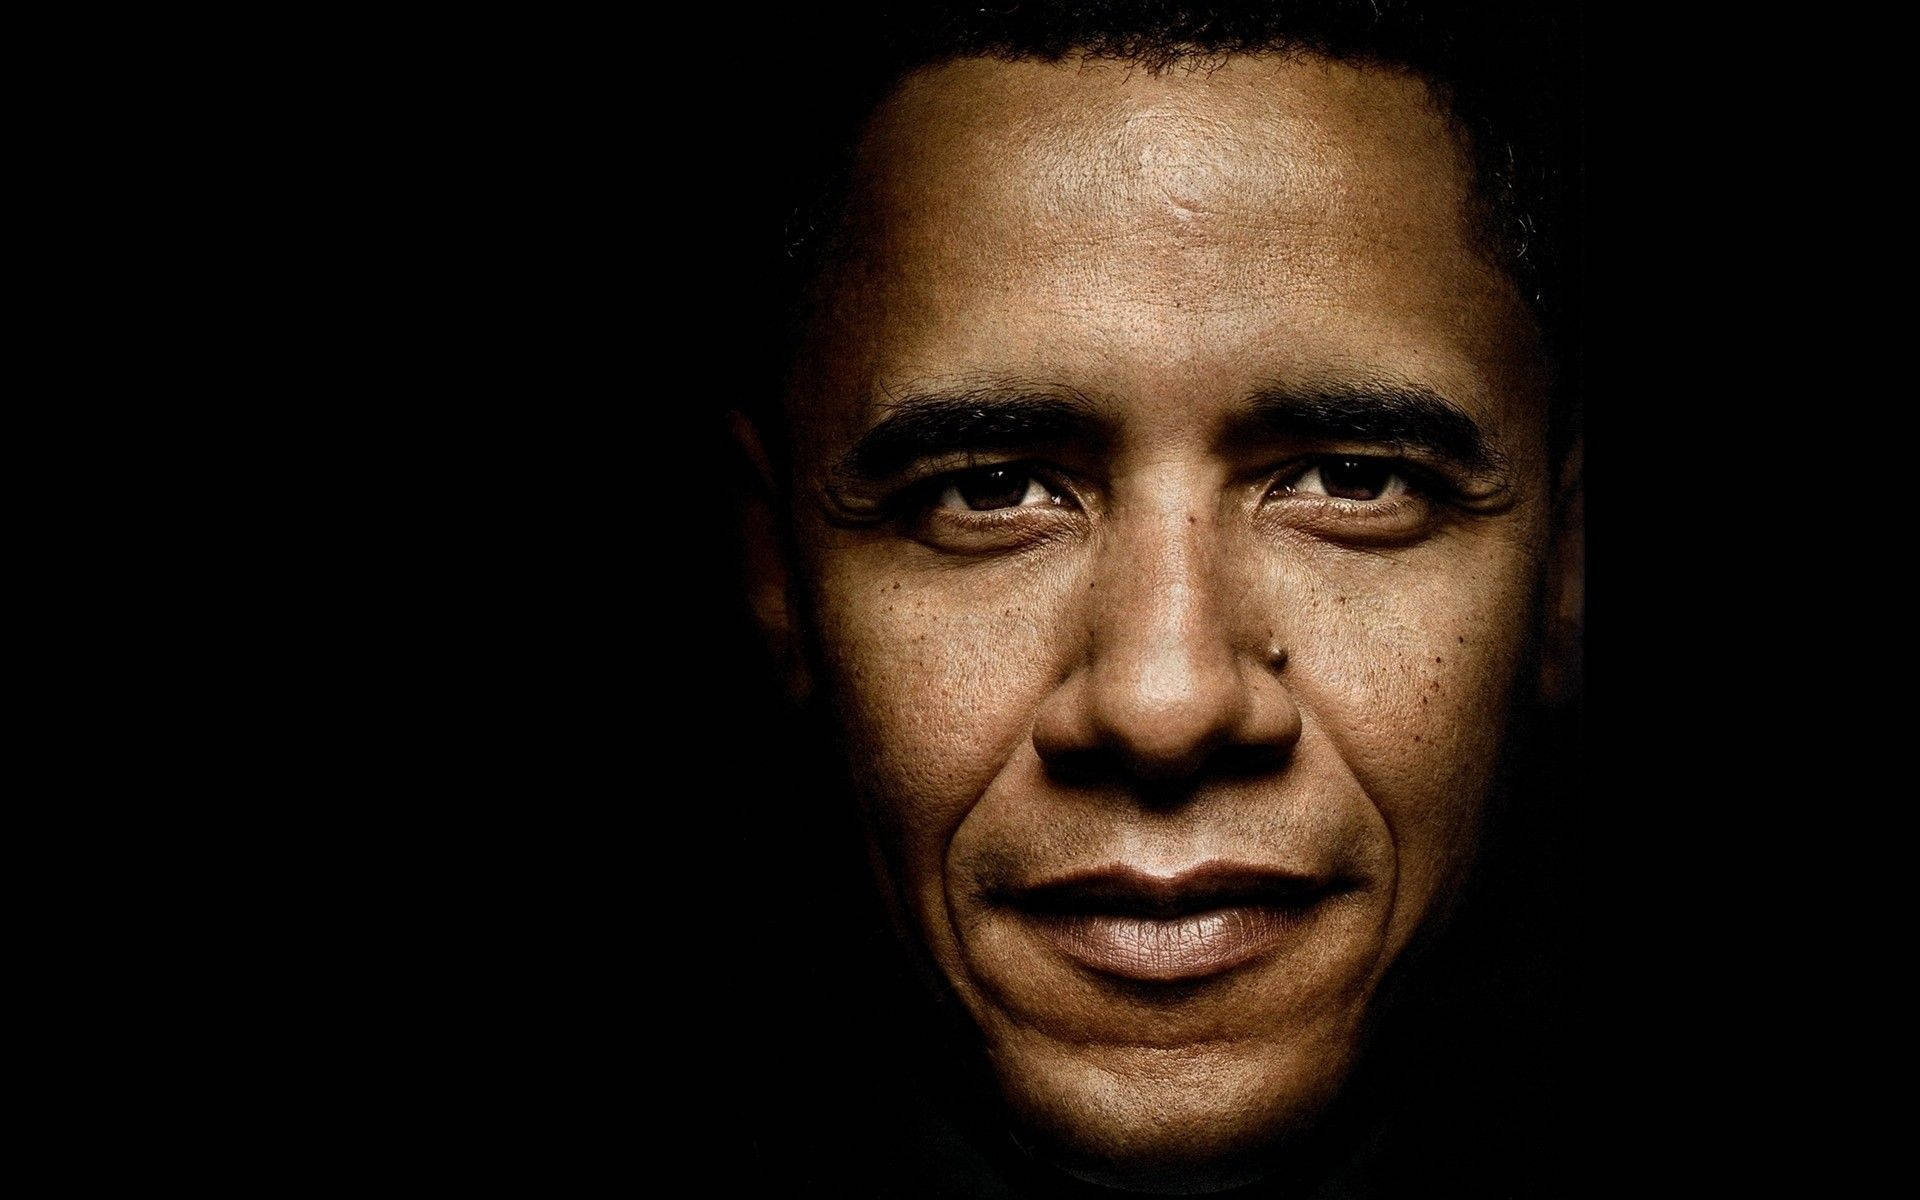 Barack Obama Close-up Portrait Background